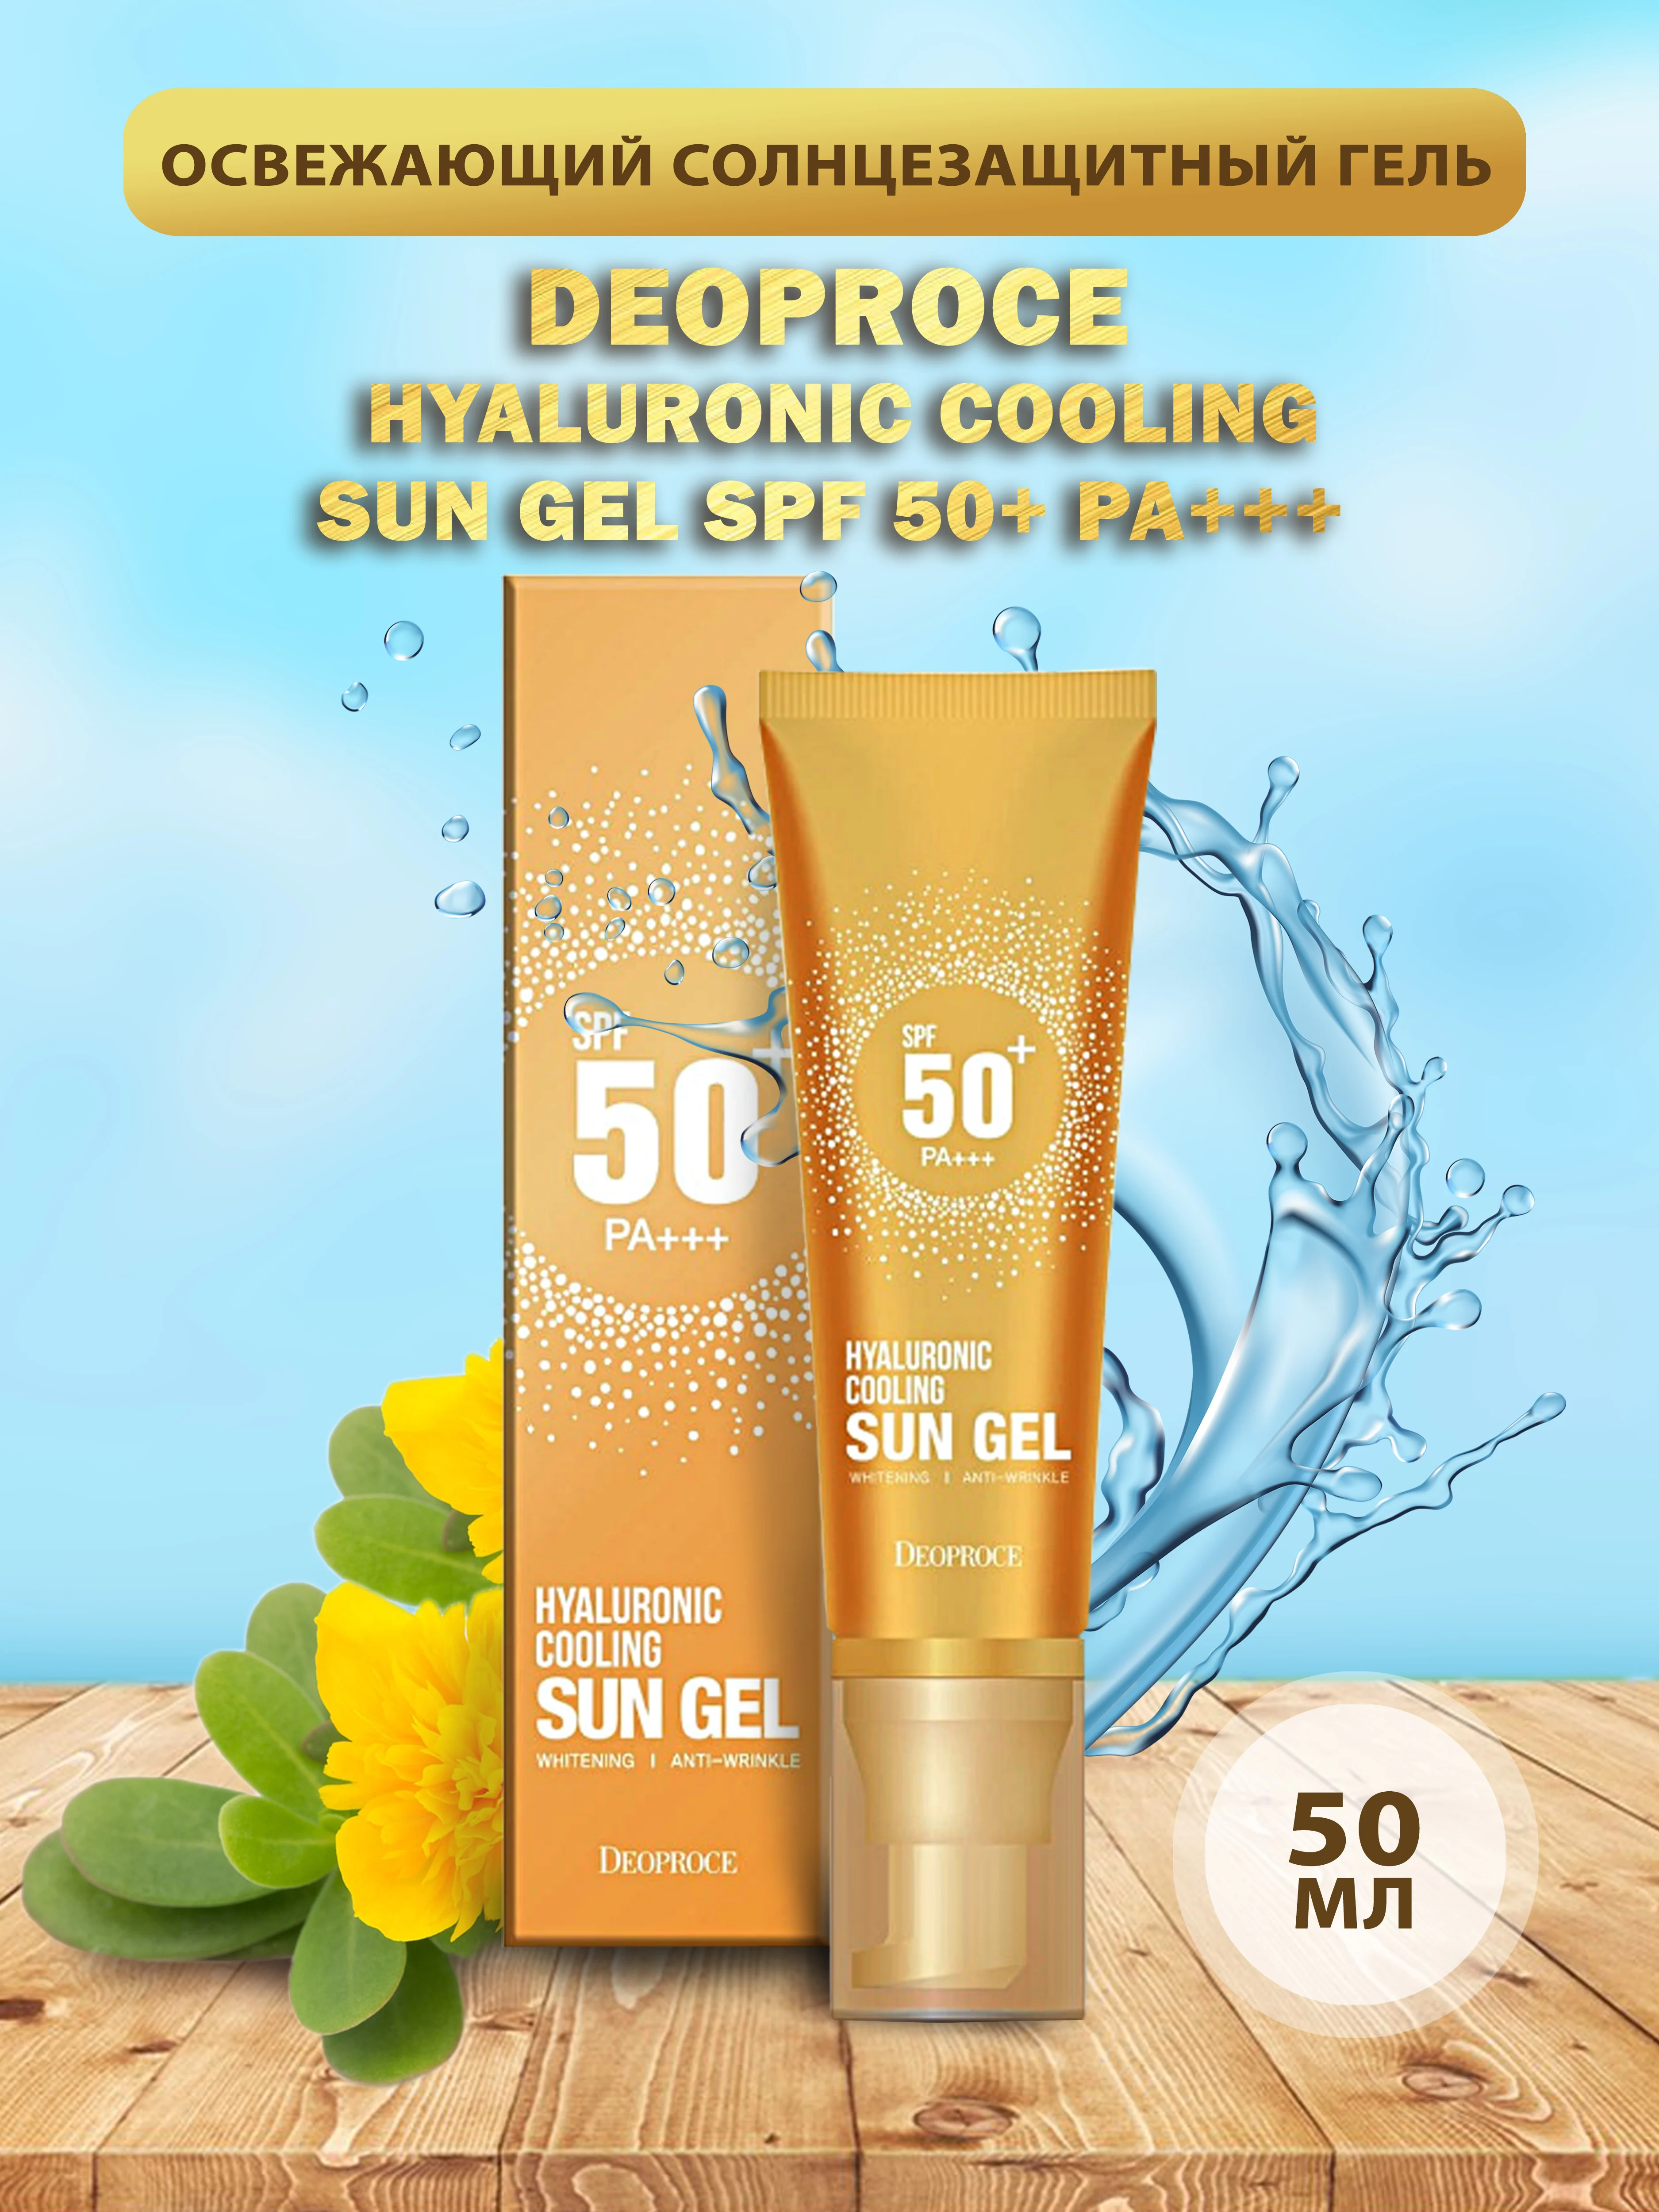 Hyaluronic cooling sun gel. Hyaluroing Cooling Sun Gel Deoproce 50+ в новой упаковке. Deoproce солнцезащитный гель c центеллой Centella Sun Gel SPF 50+ pa+++. GRACEDAY Hyaluronic Cooling Sun Gel 50 g.